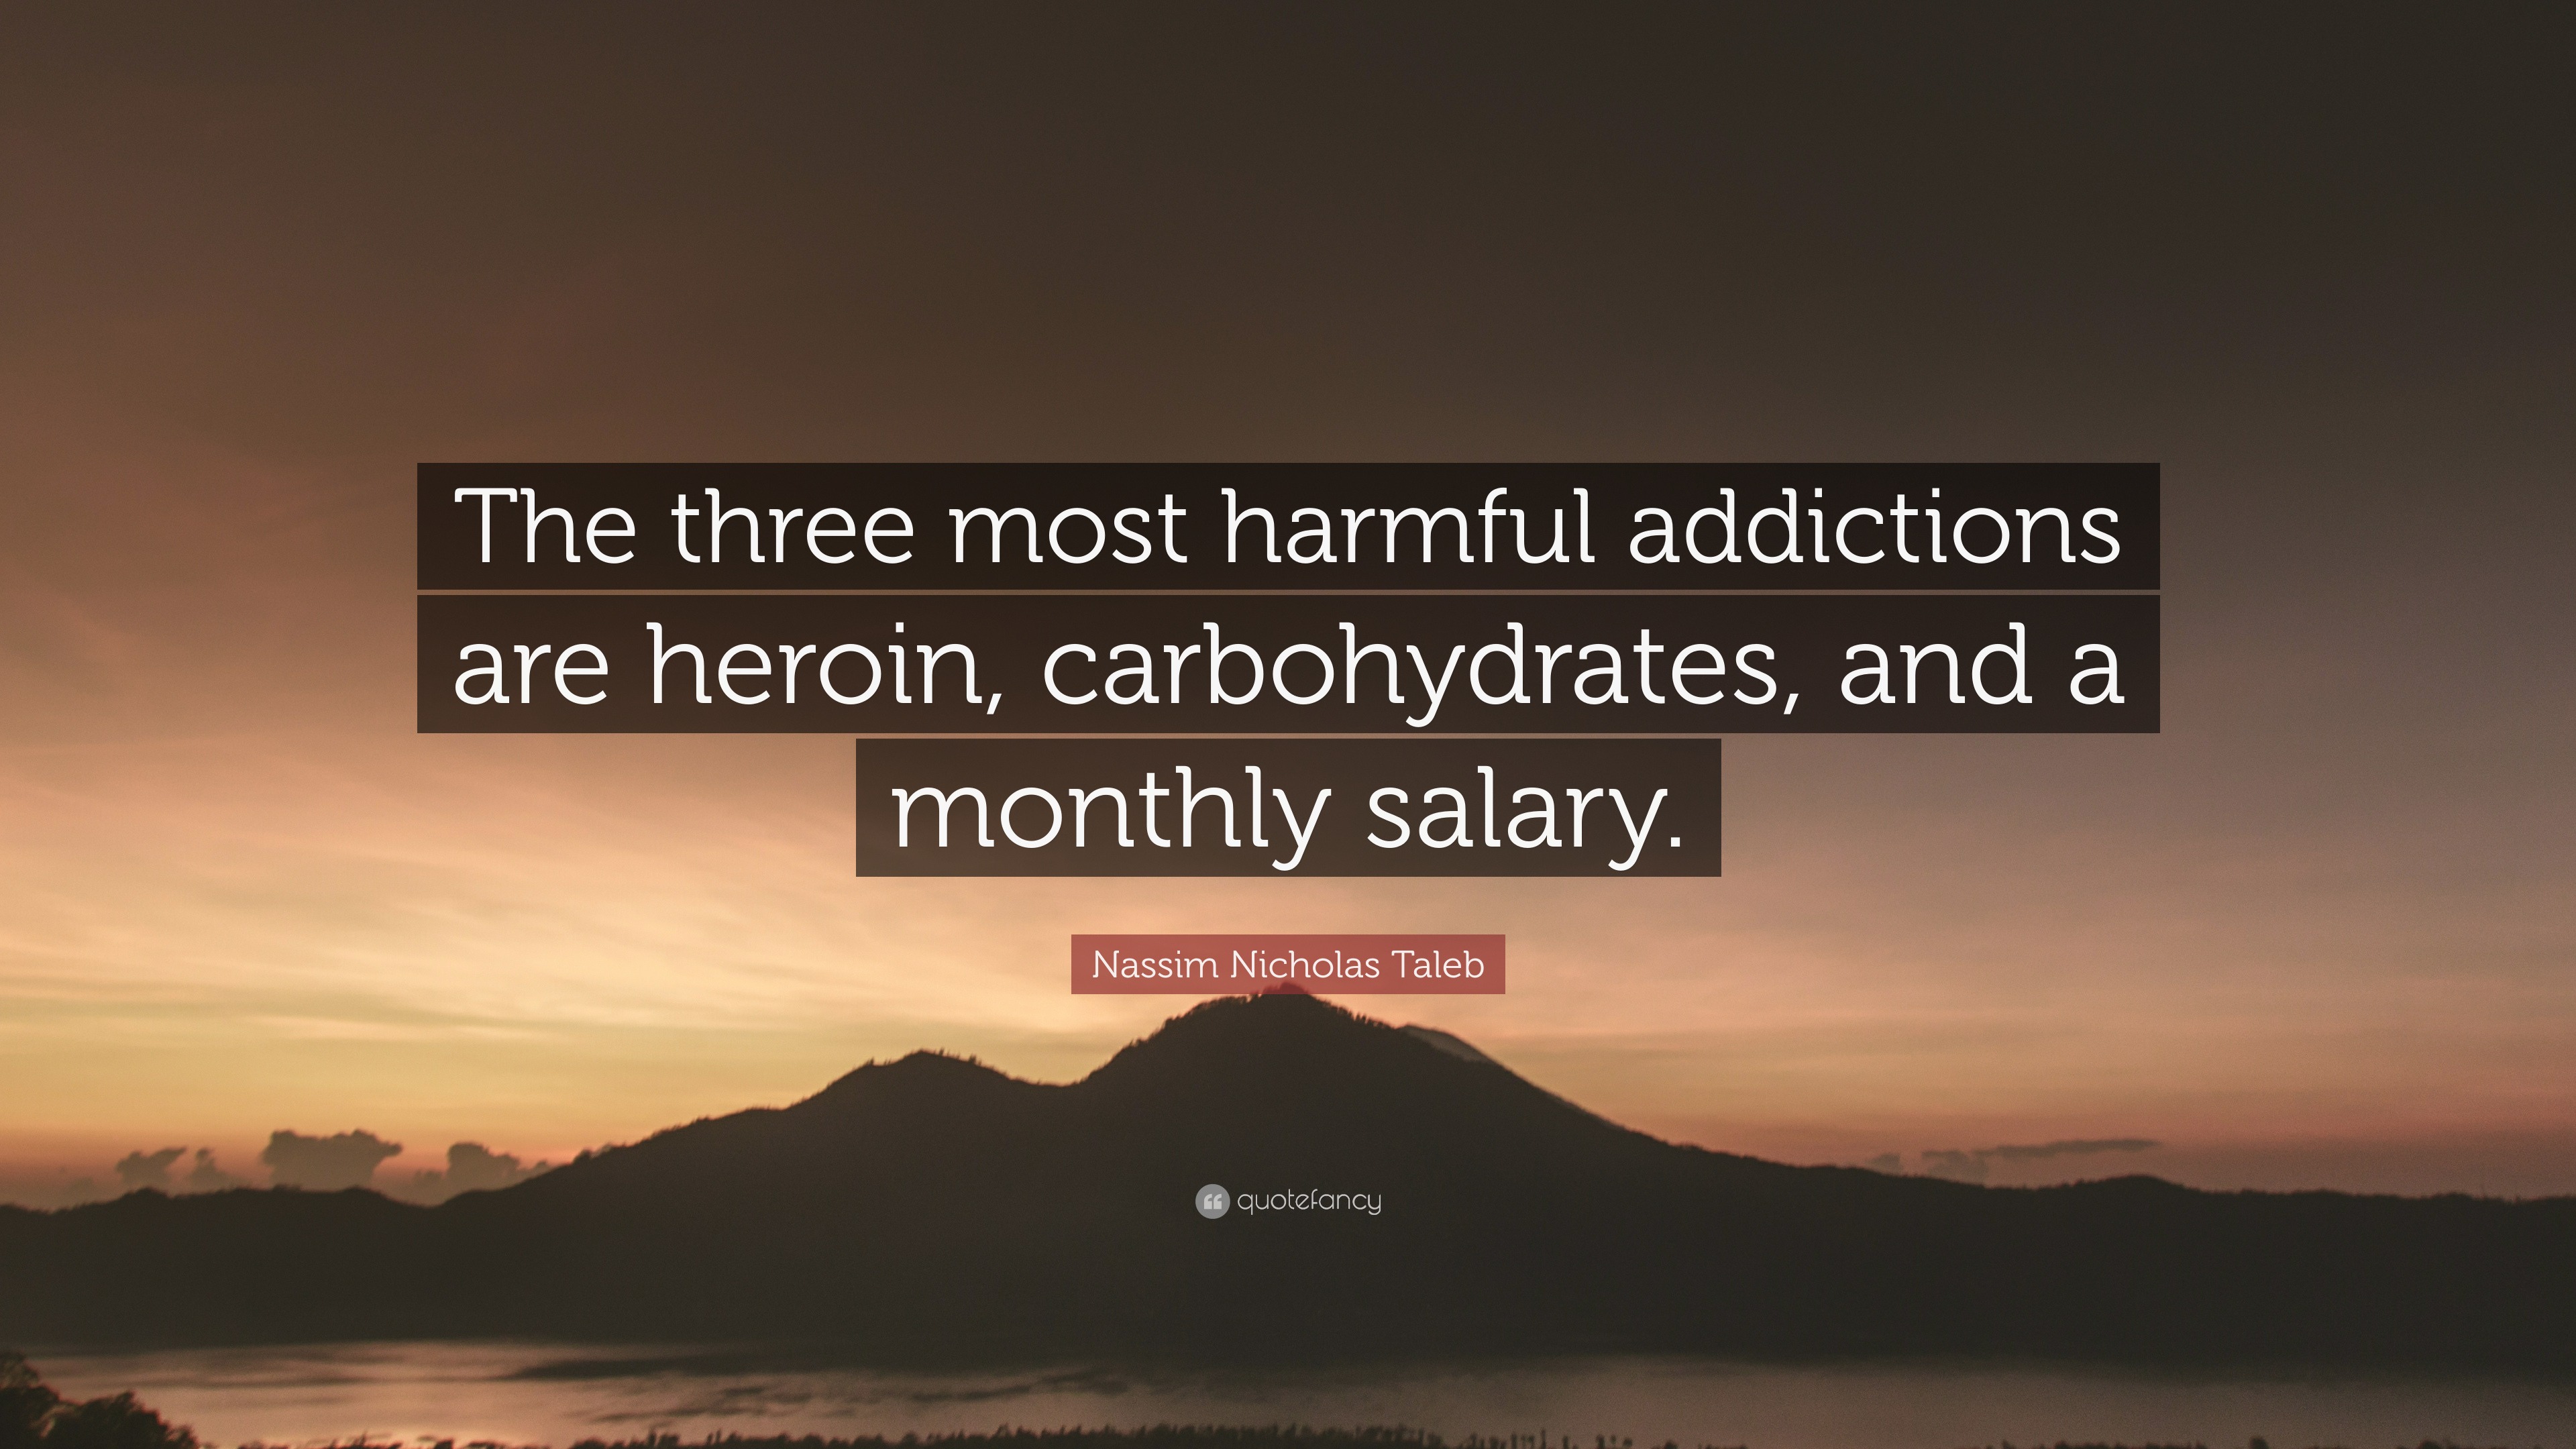 Nassim Nicholas Taleb Quote: “The three most harmful addictions are